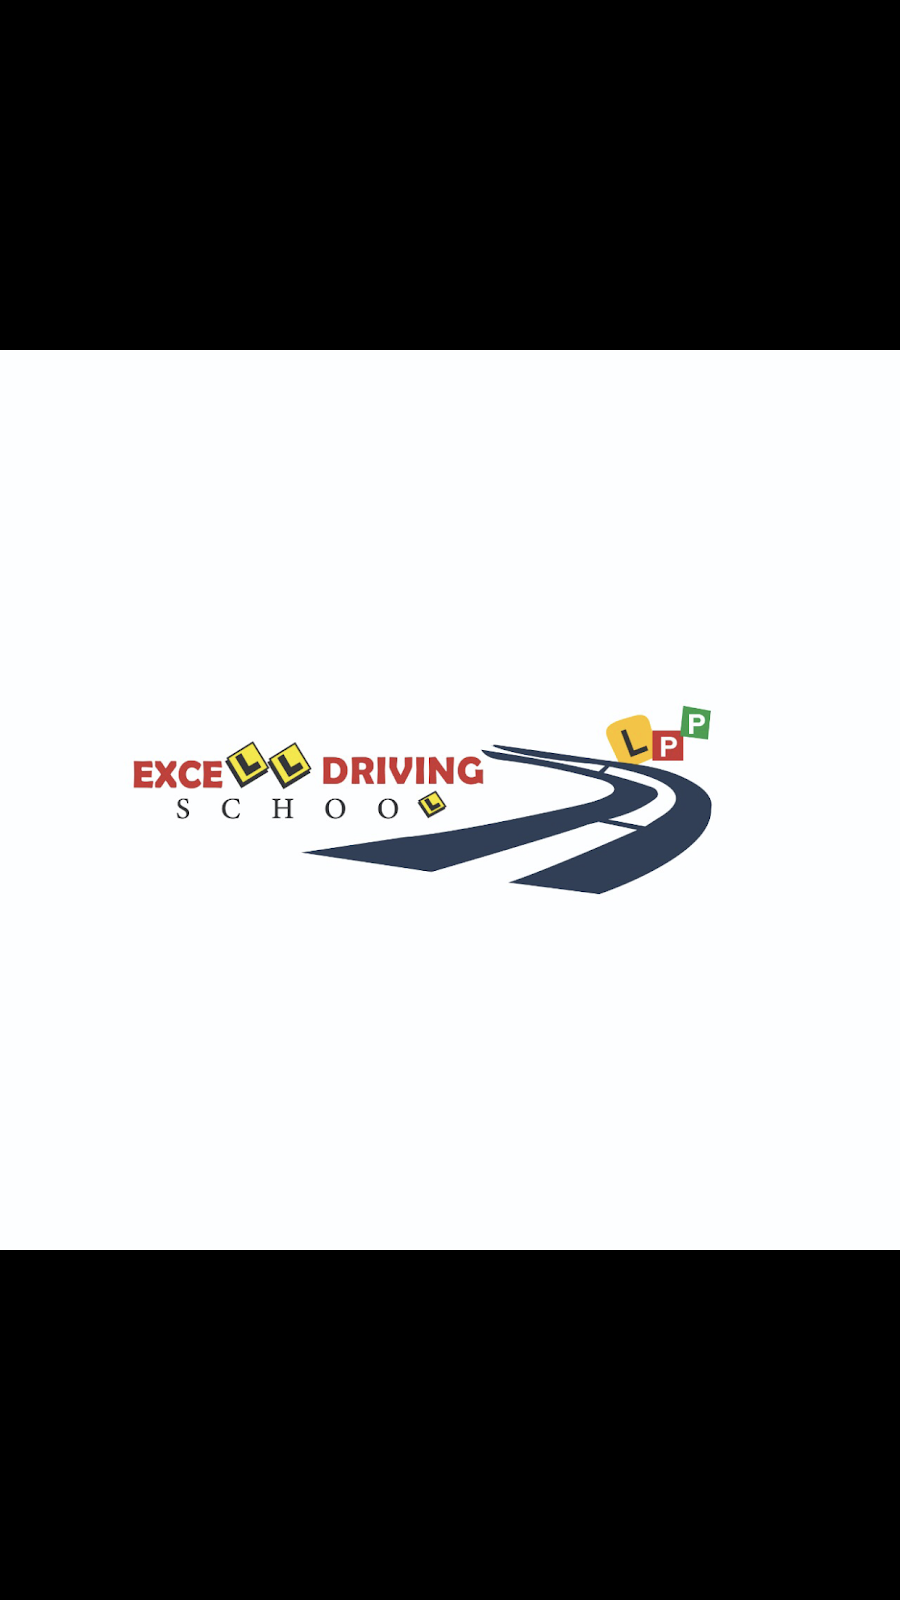 Excell Driving School |  | 20 Garro St, Sunnybank Hills QLD 4109, Australia | 0444574322 OR +61 444 574 322